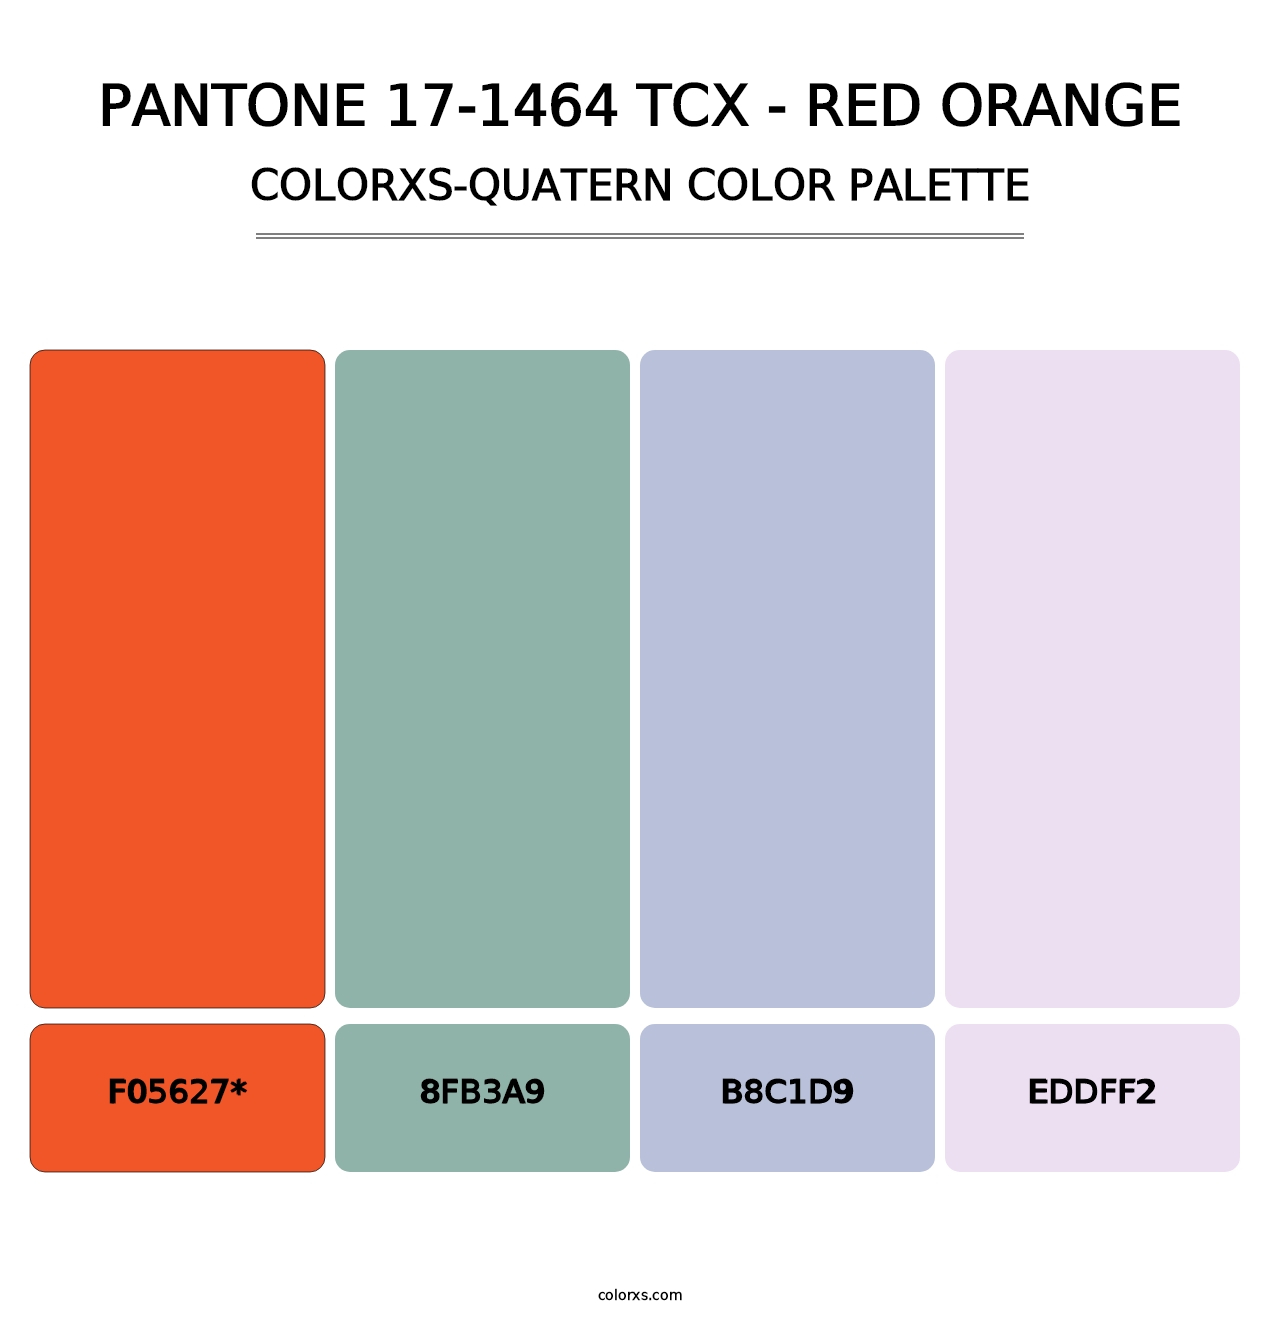 PANTONE 17-1464 TCX - Red Orange - Colorxs Quatern Palette